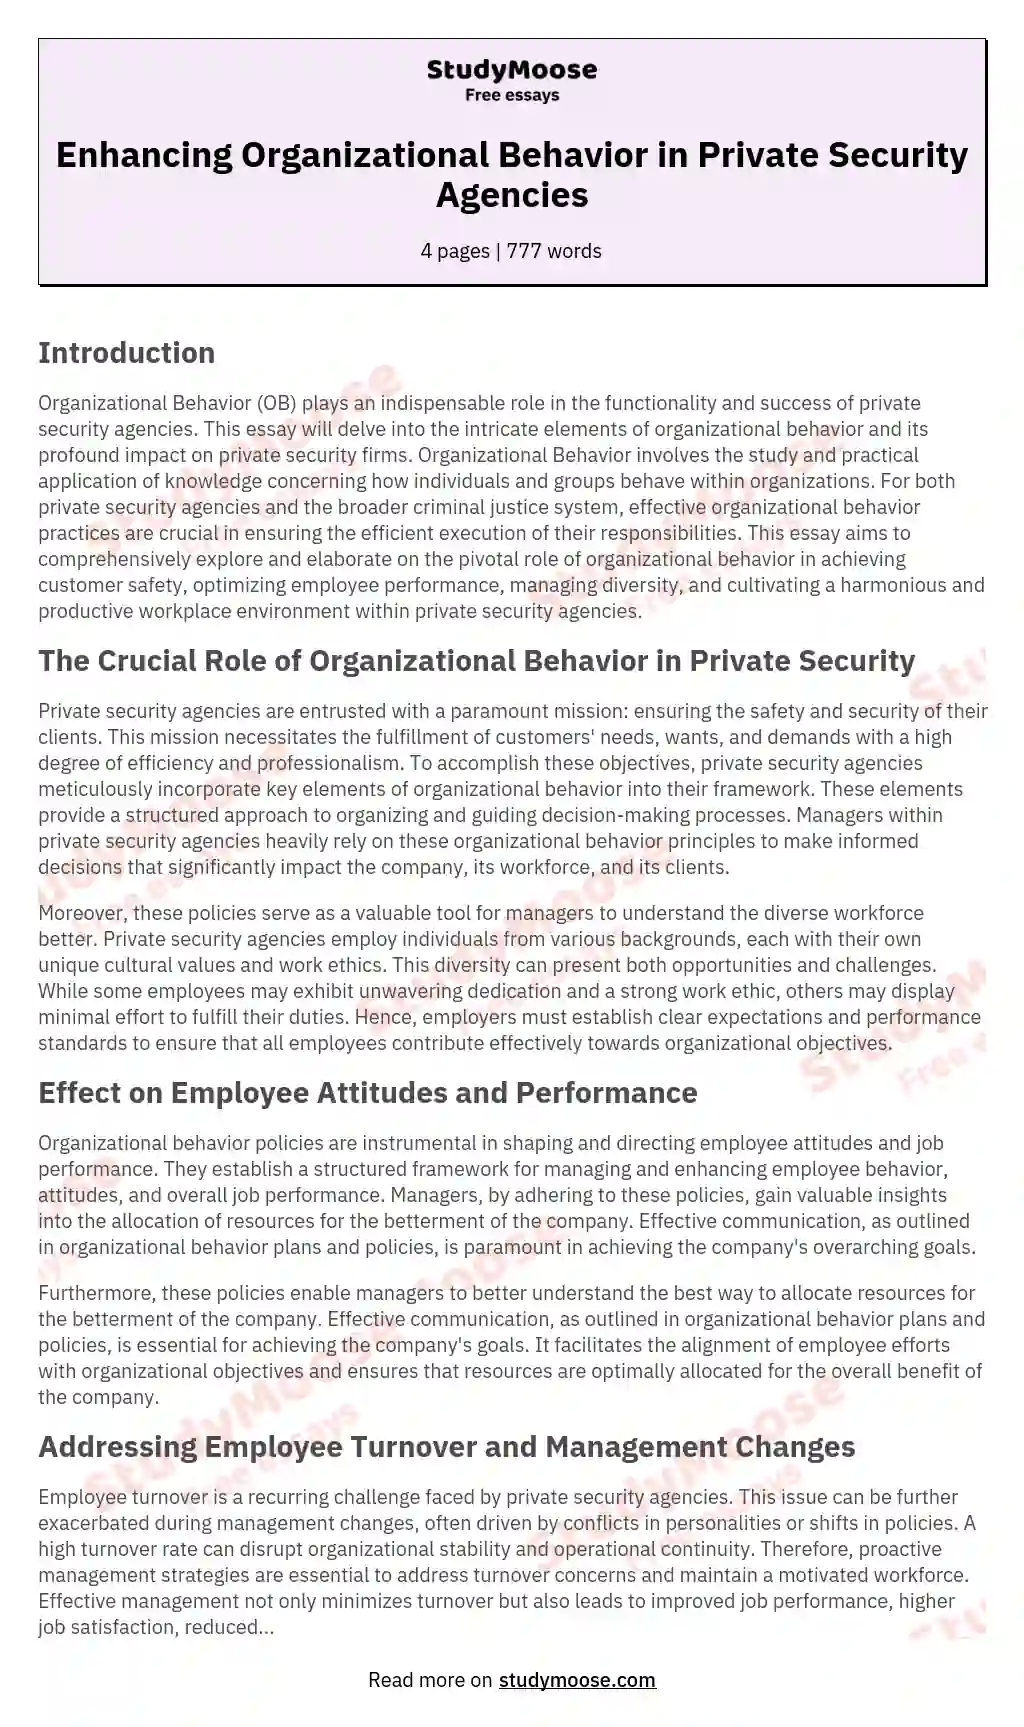 Enhancing Organizational Behavior in Private Security Agencies essay